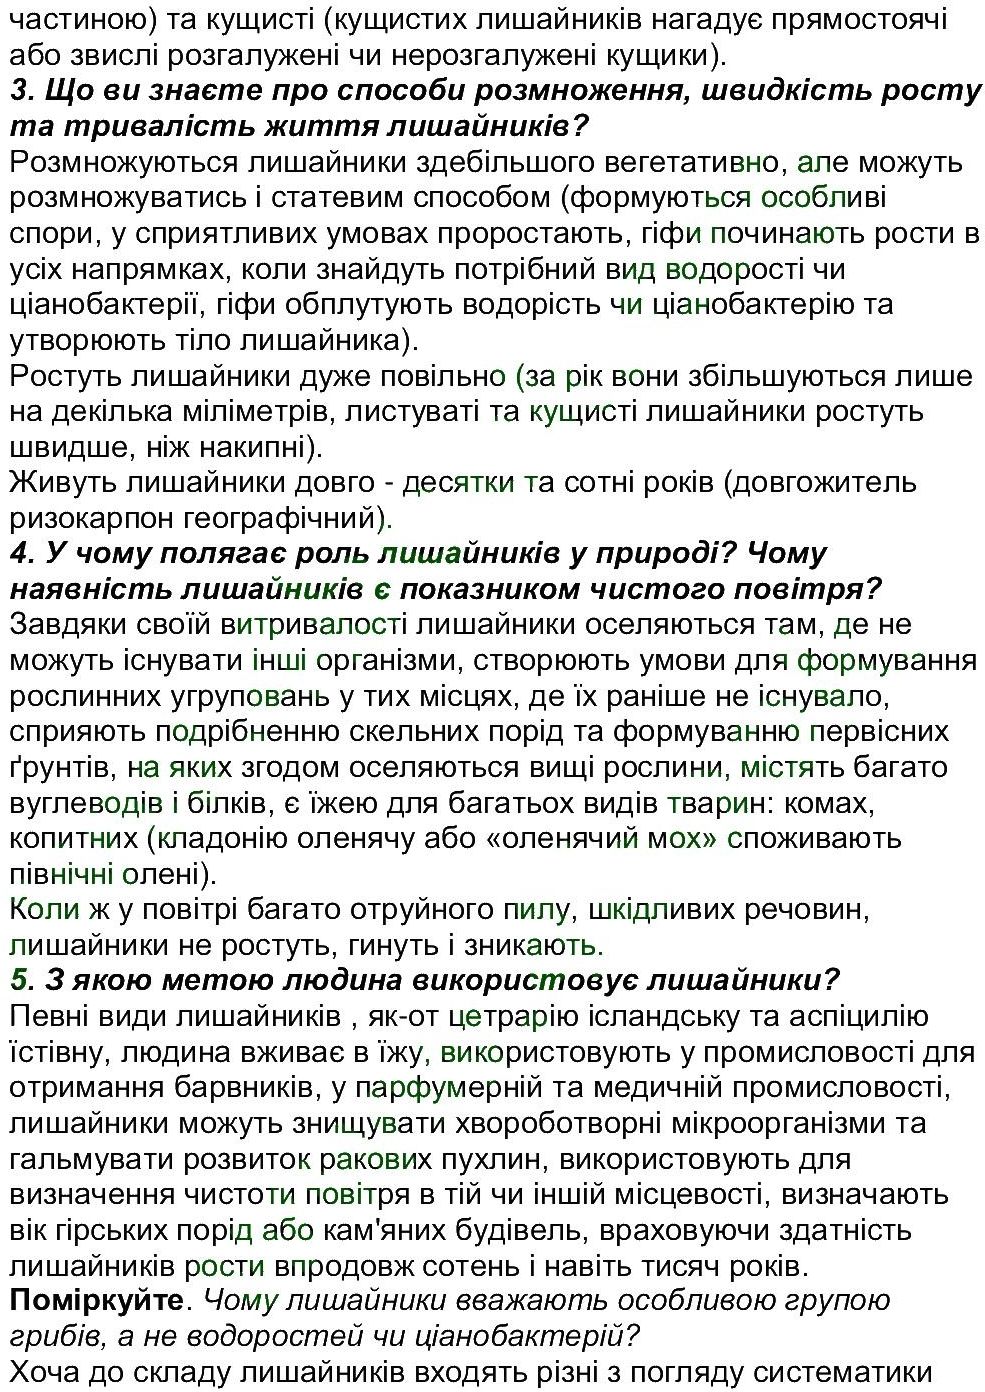 6-biologiya-li-ostapchenko-pg-balan-nyu-matyash-2016--tema-5-gribi-ст198-203-rnd9220.jpg